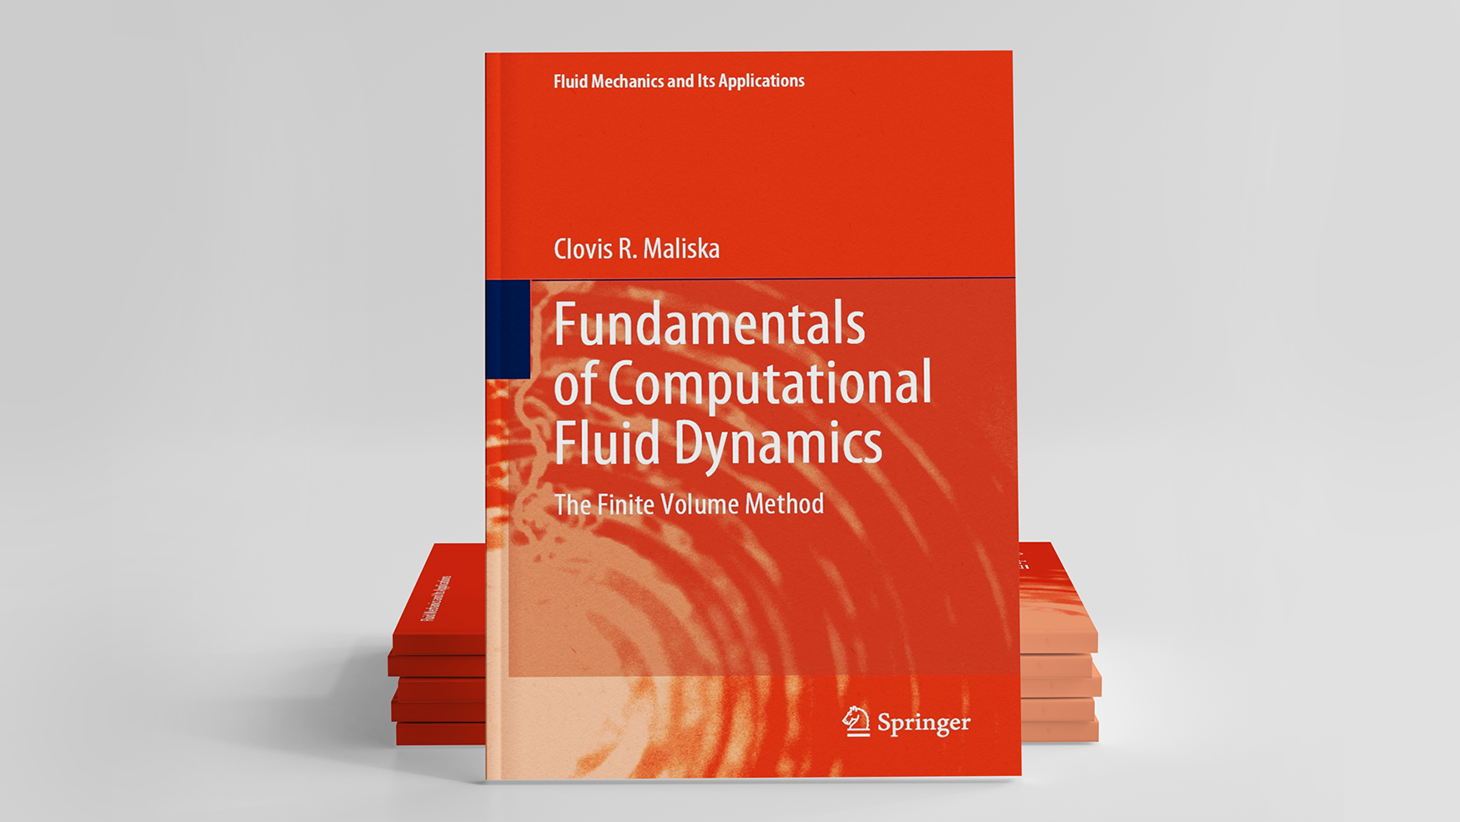 Conheça o livro “Fundamentals of Computational Fluid Dynamics: The Finite Volume Method”, nova obra do professor Clovis R. Maliska